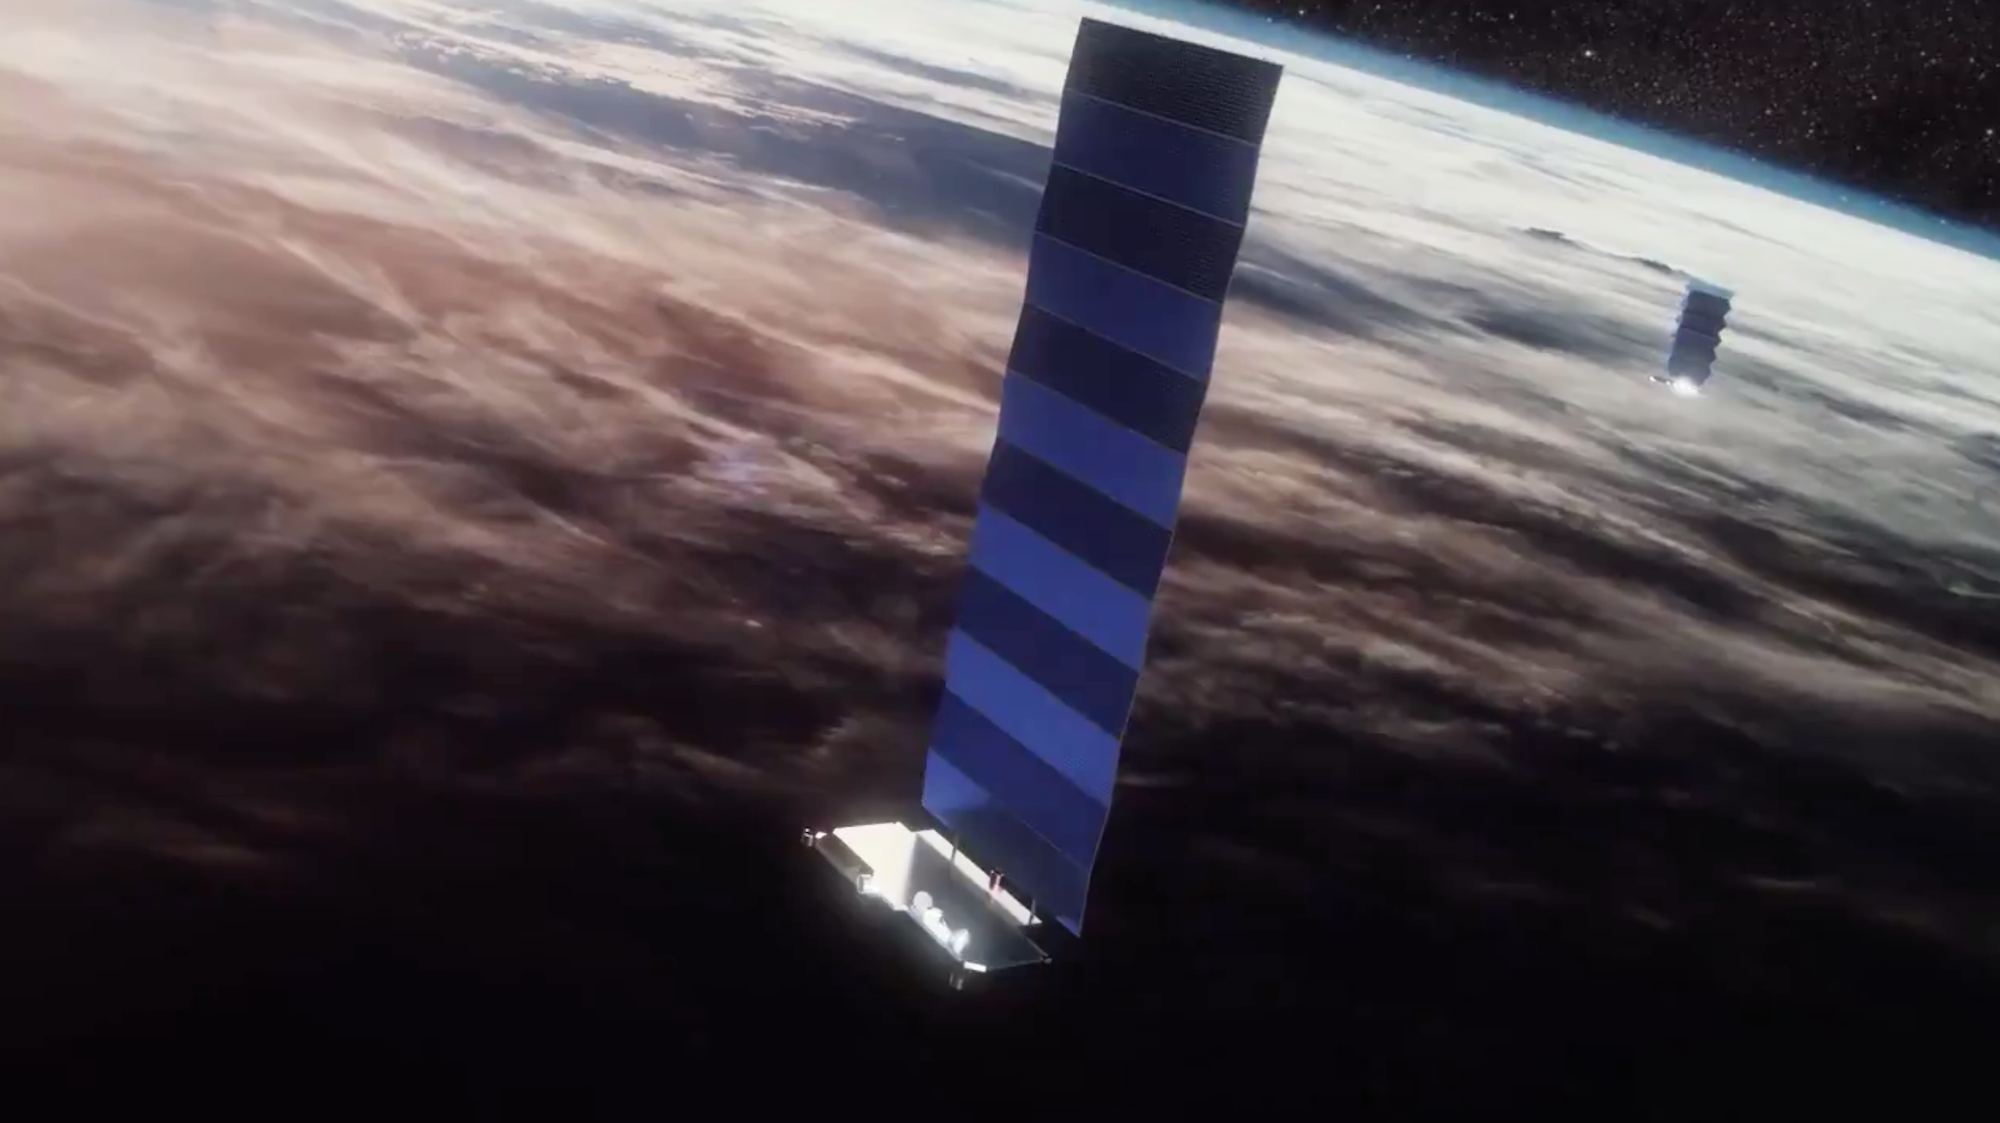 Starlink satellites in Earth orbit, under consideration for Mars